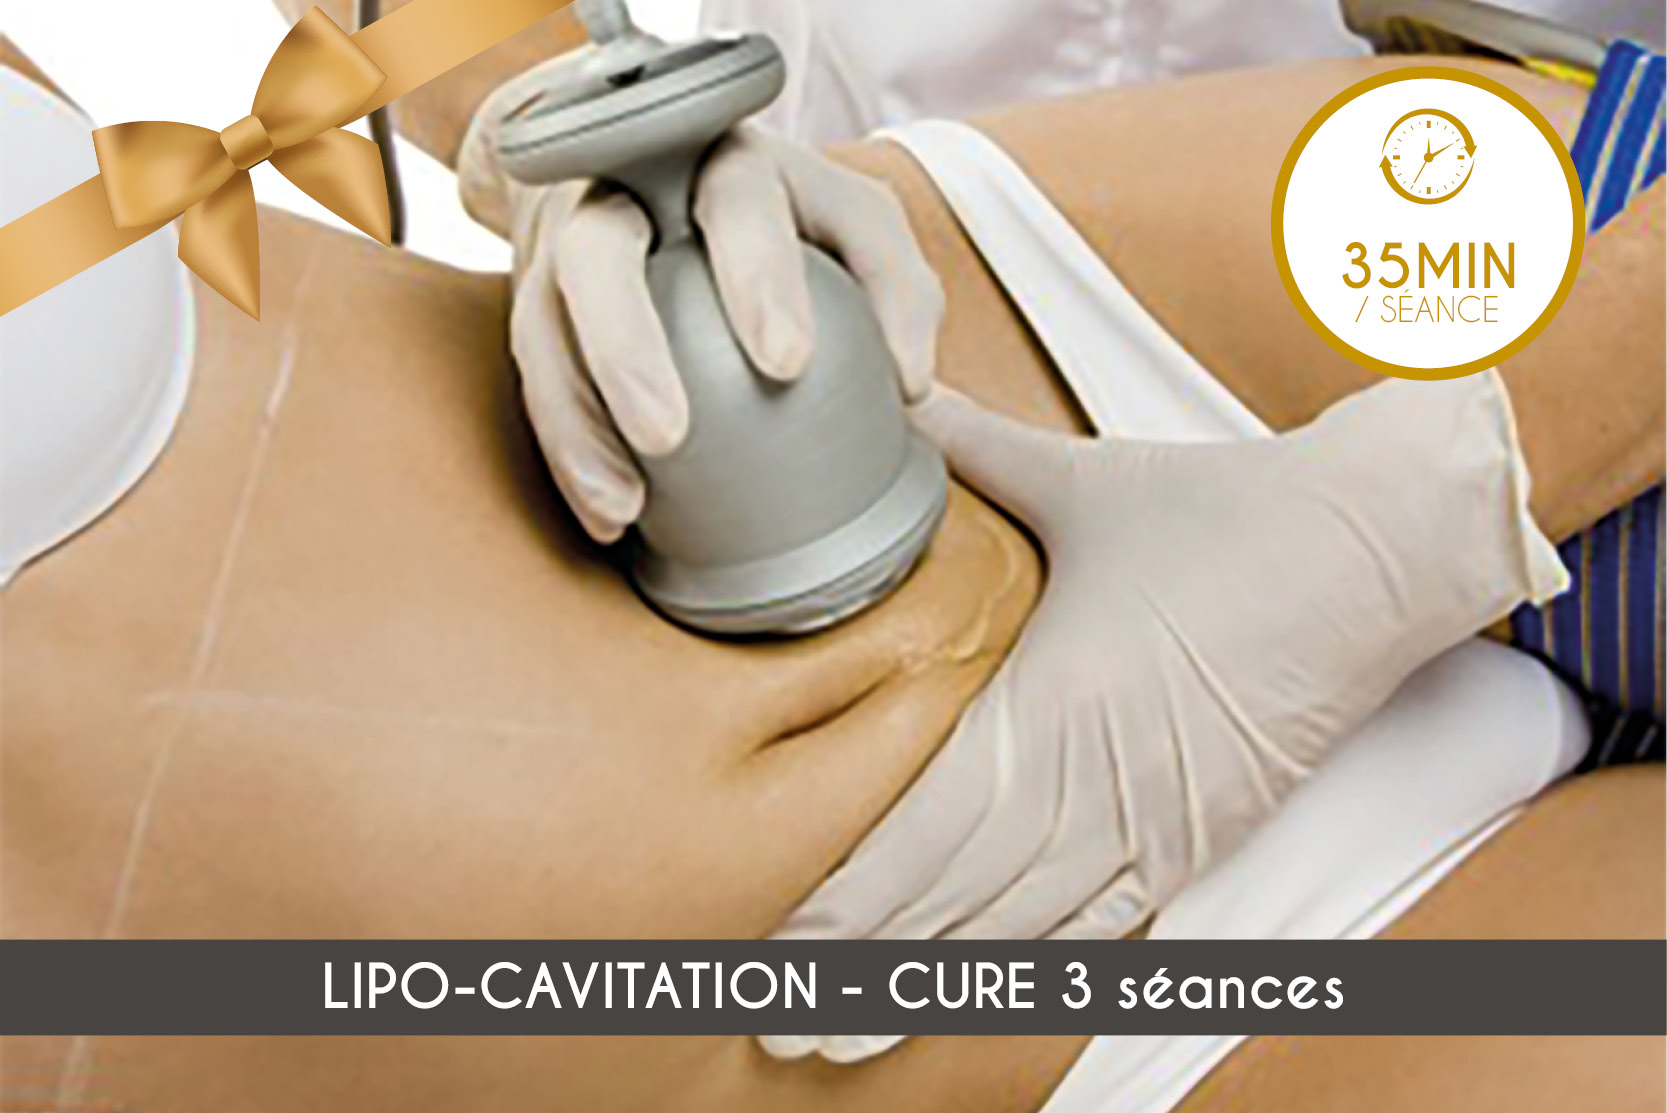 Lipo-Cavitation - Cure 3 séances